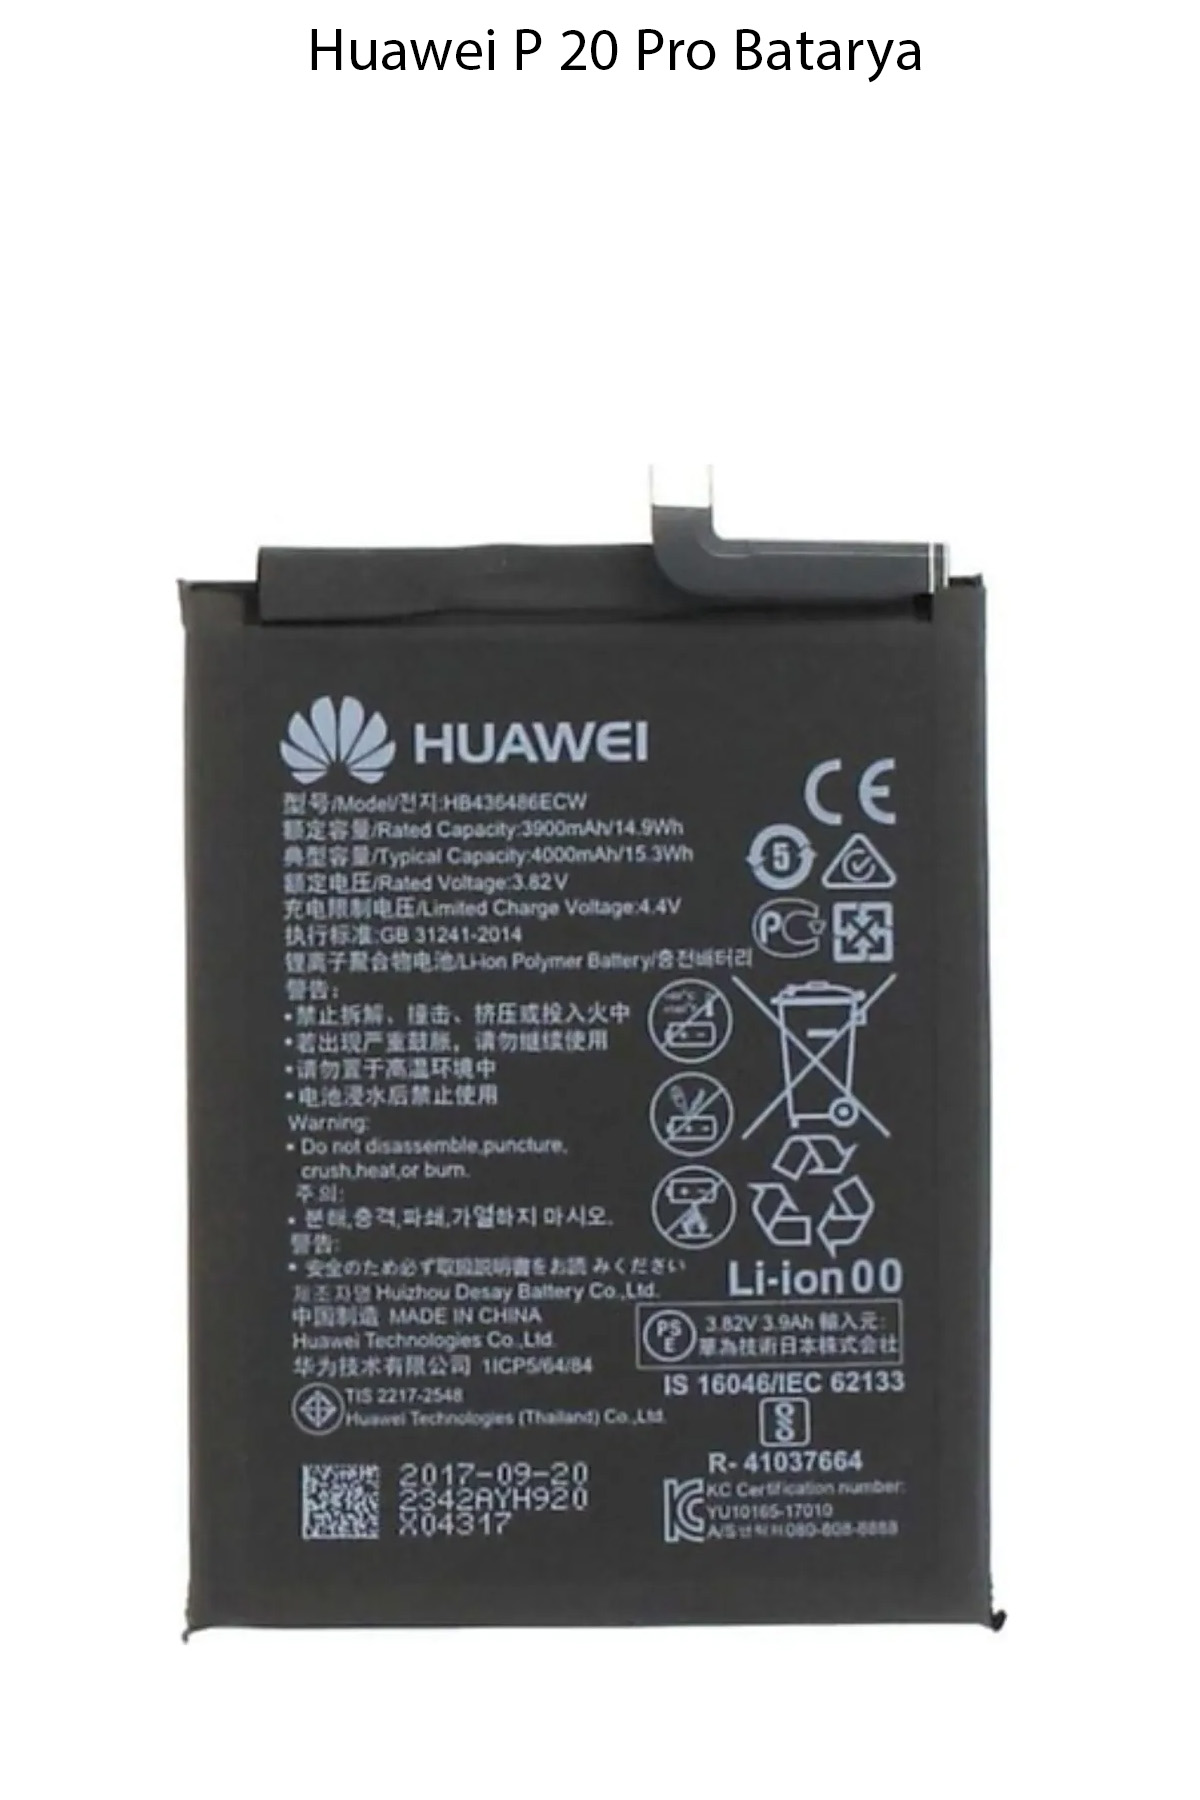 Huawei P20 Pro Batarya Pil 4000 Mah